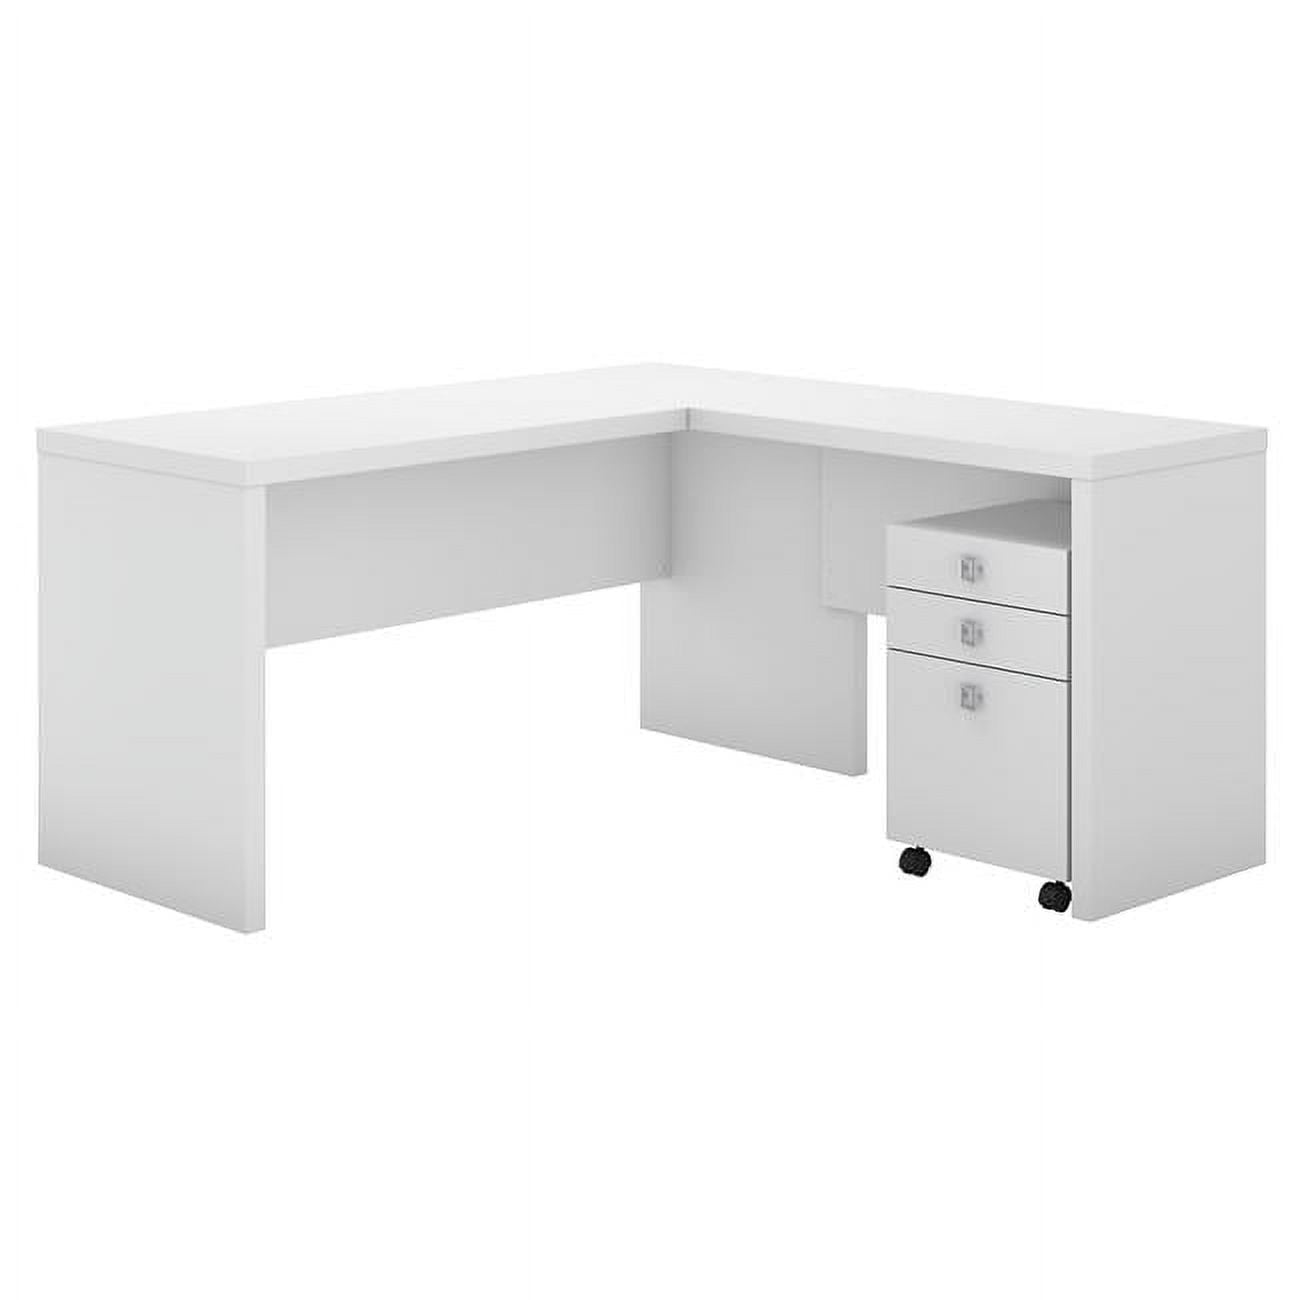 Ech008pw Echo L Shaped Desk With Mobile File Cabinet - Pure White